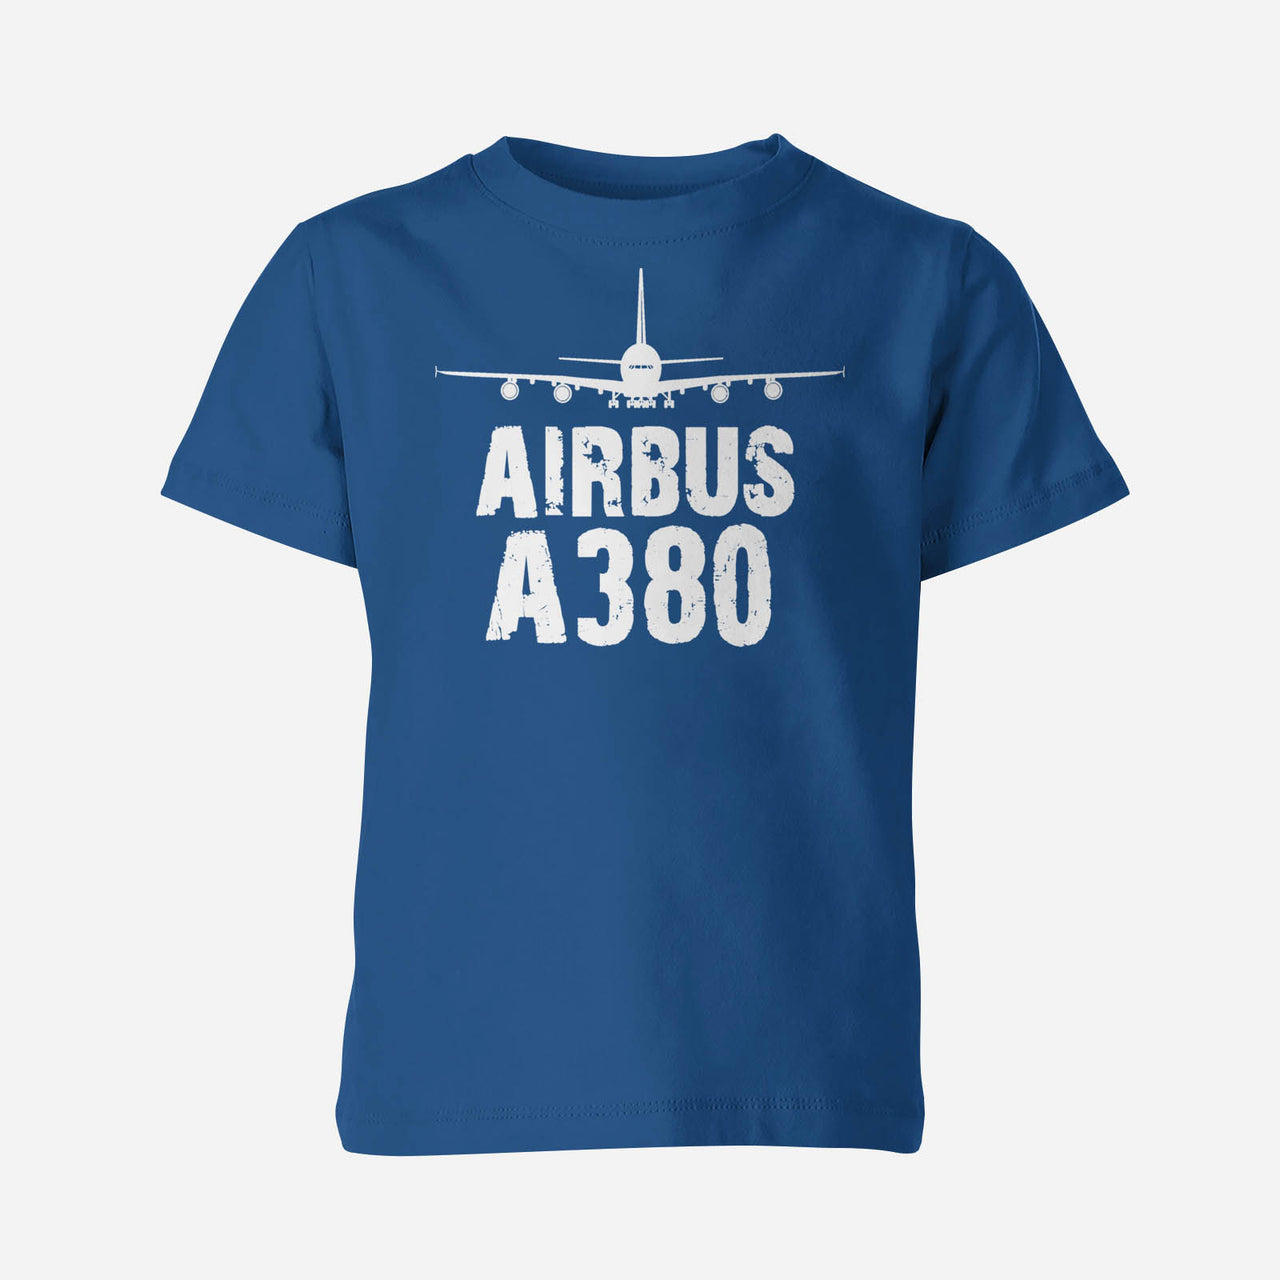 Airbus A380 & Plane Designed Children T-Shirts